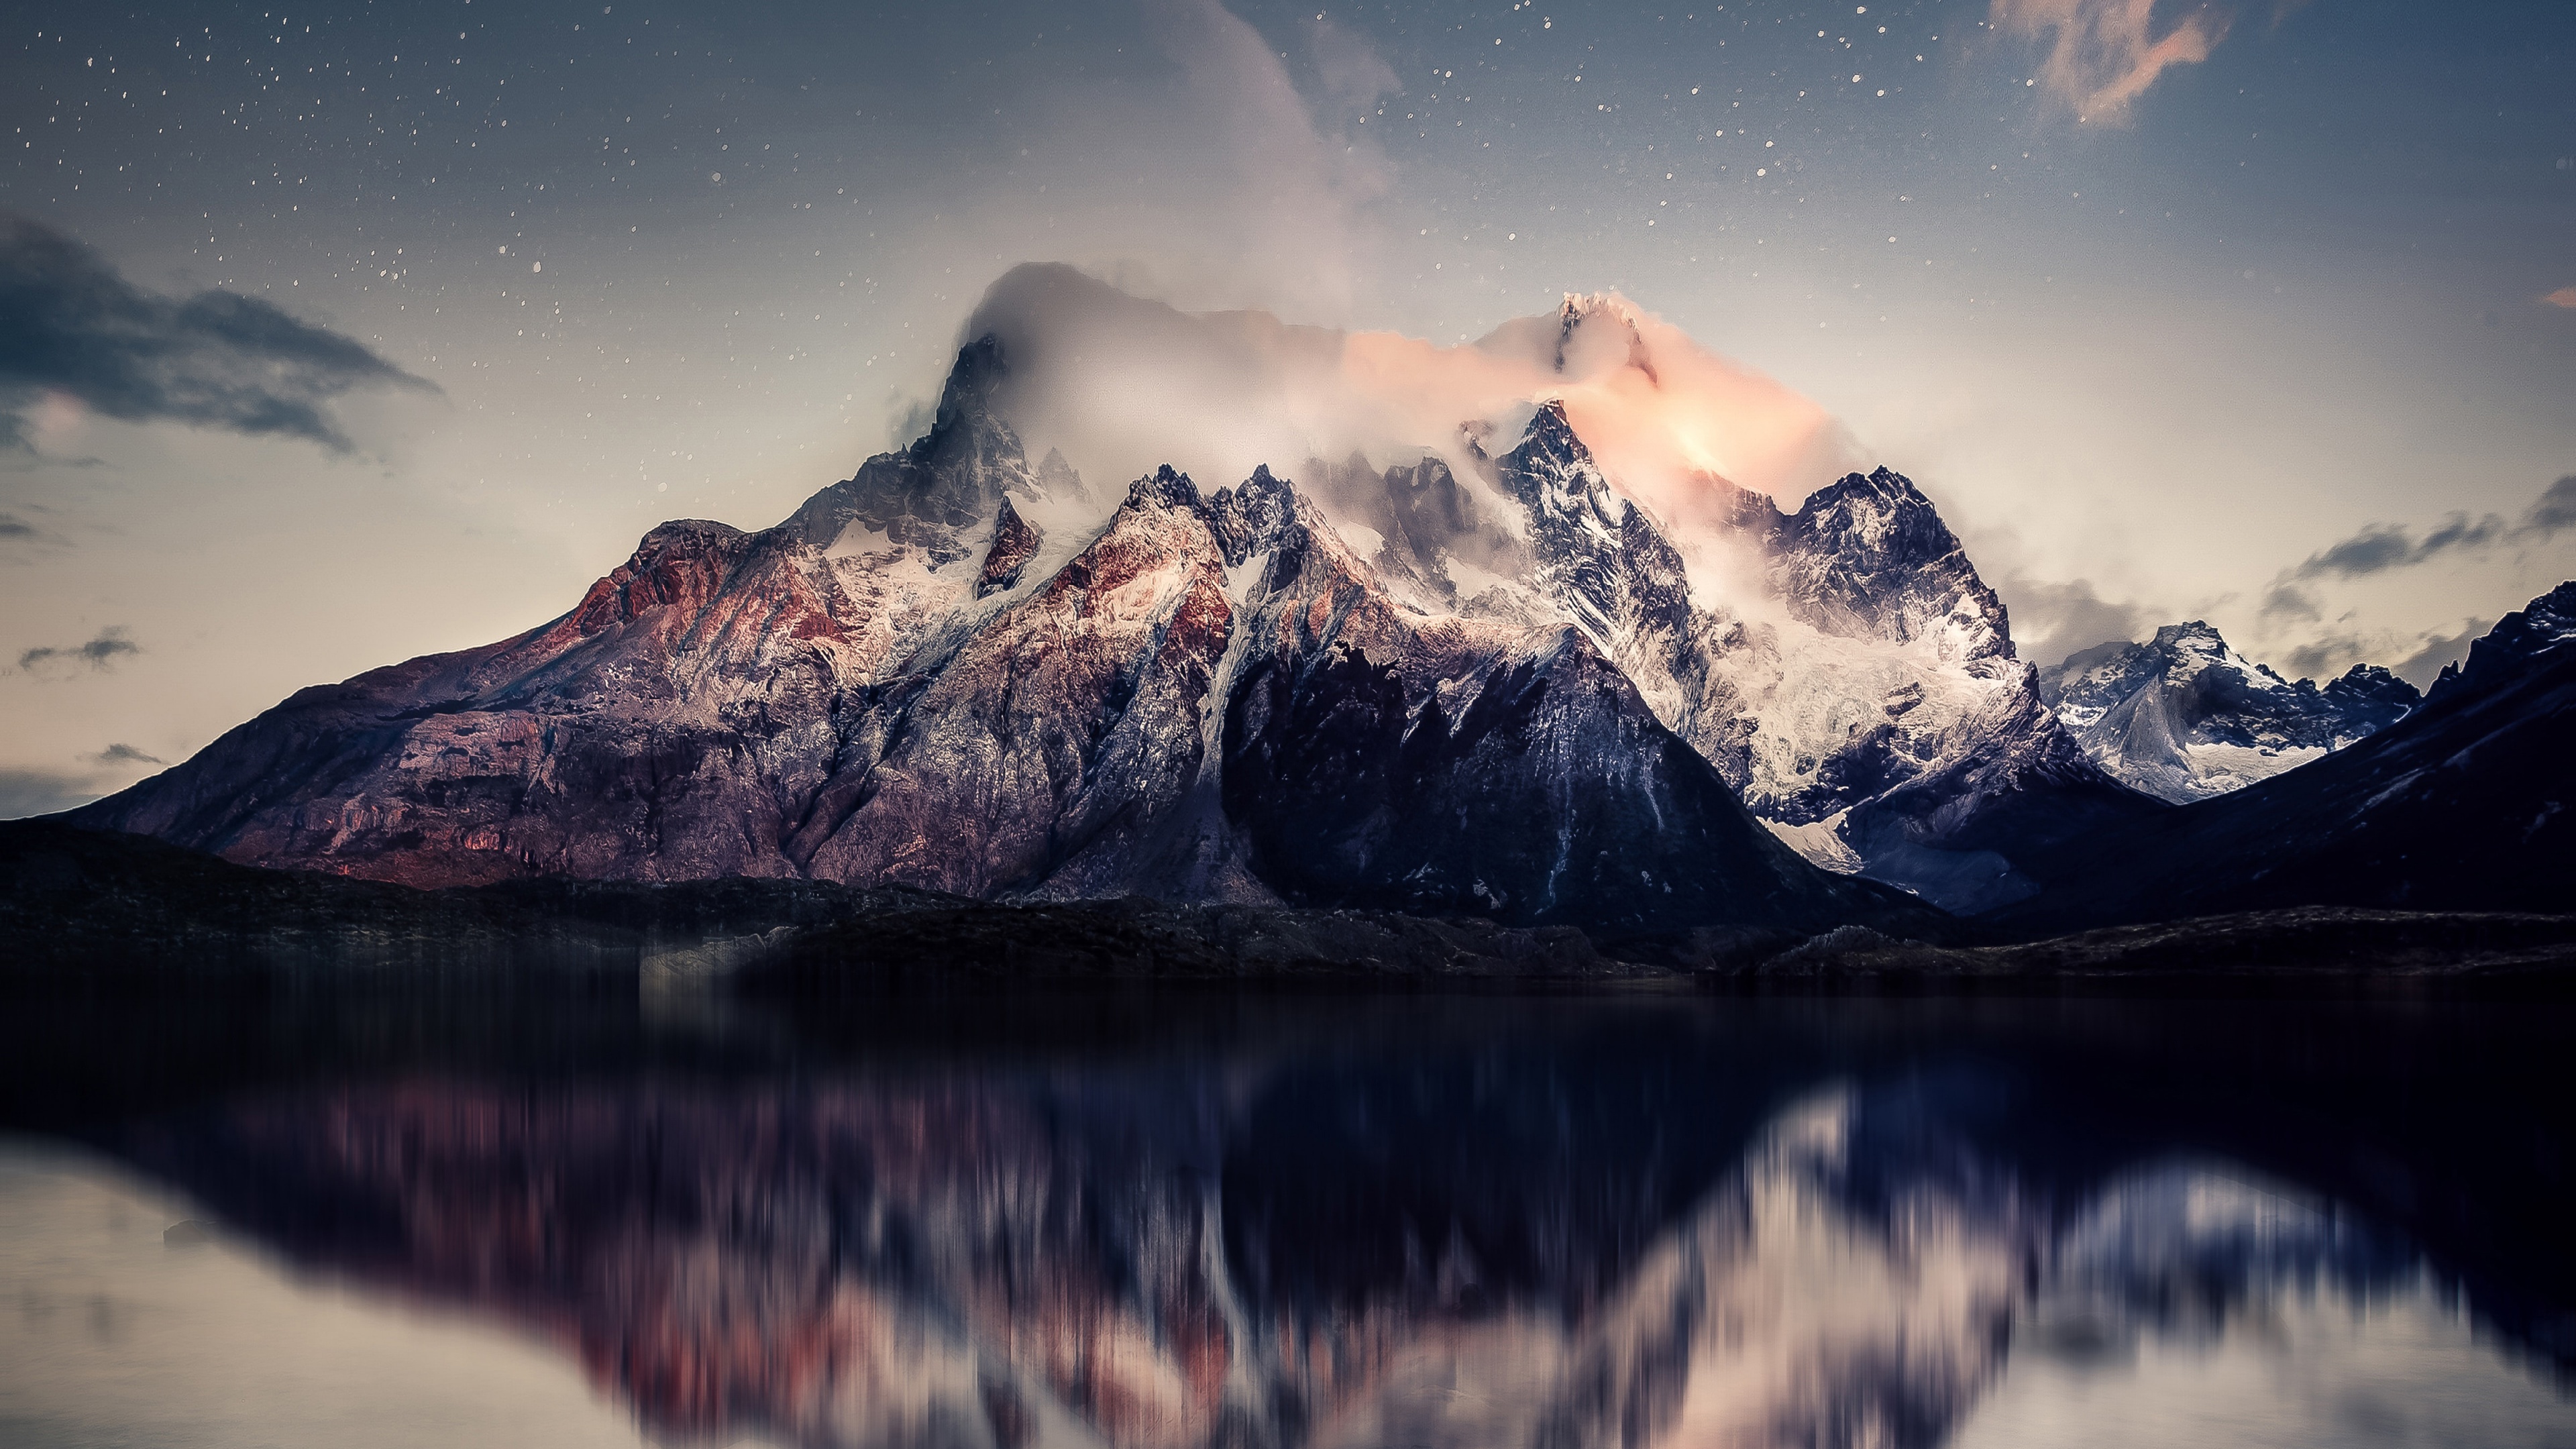 Mountain reflection 2K wallpaper download